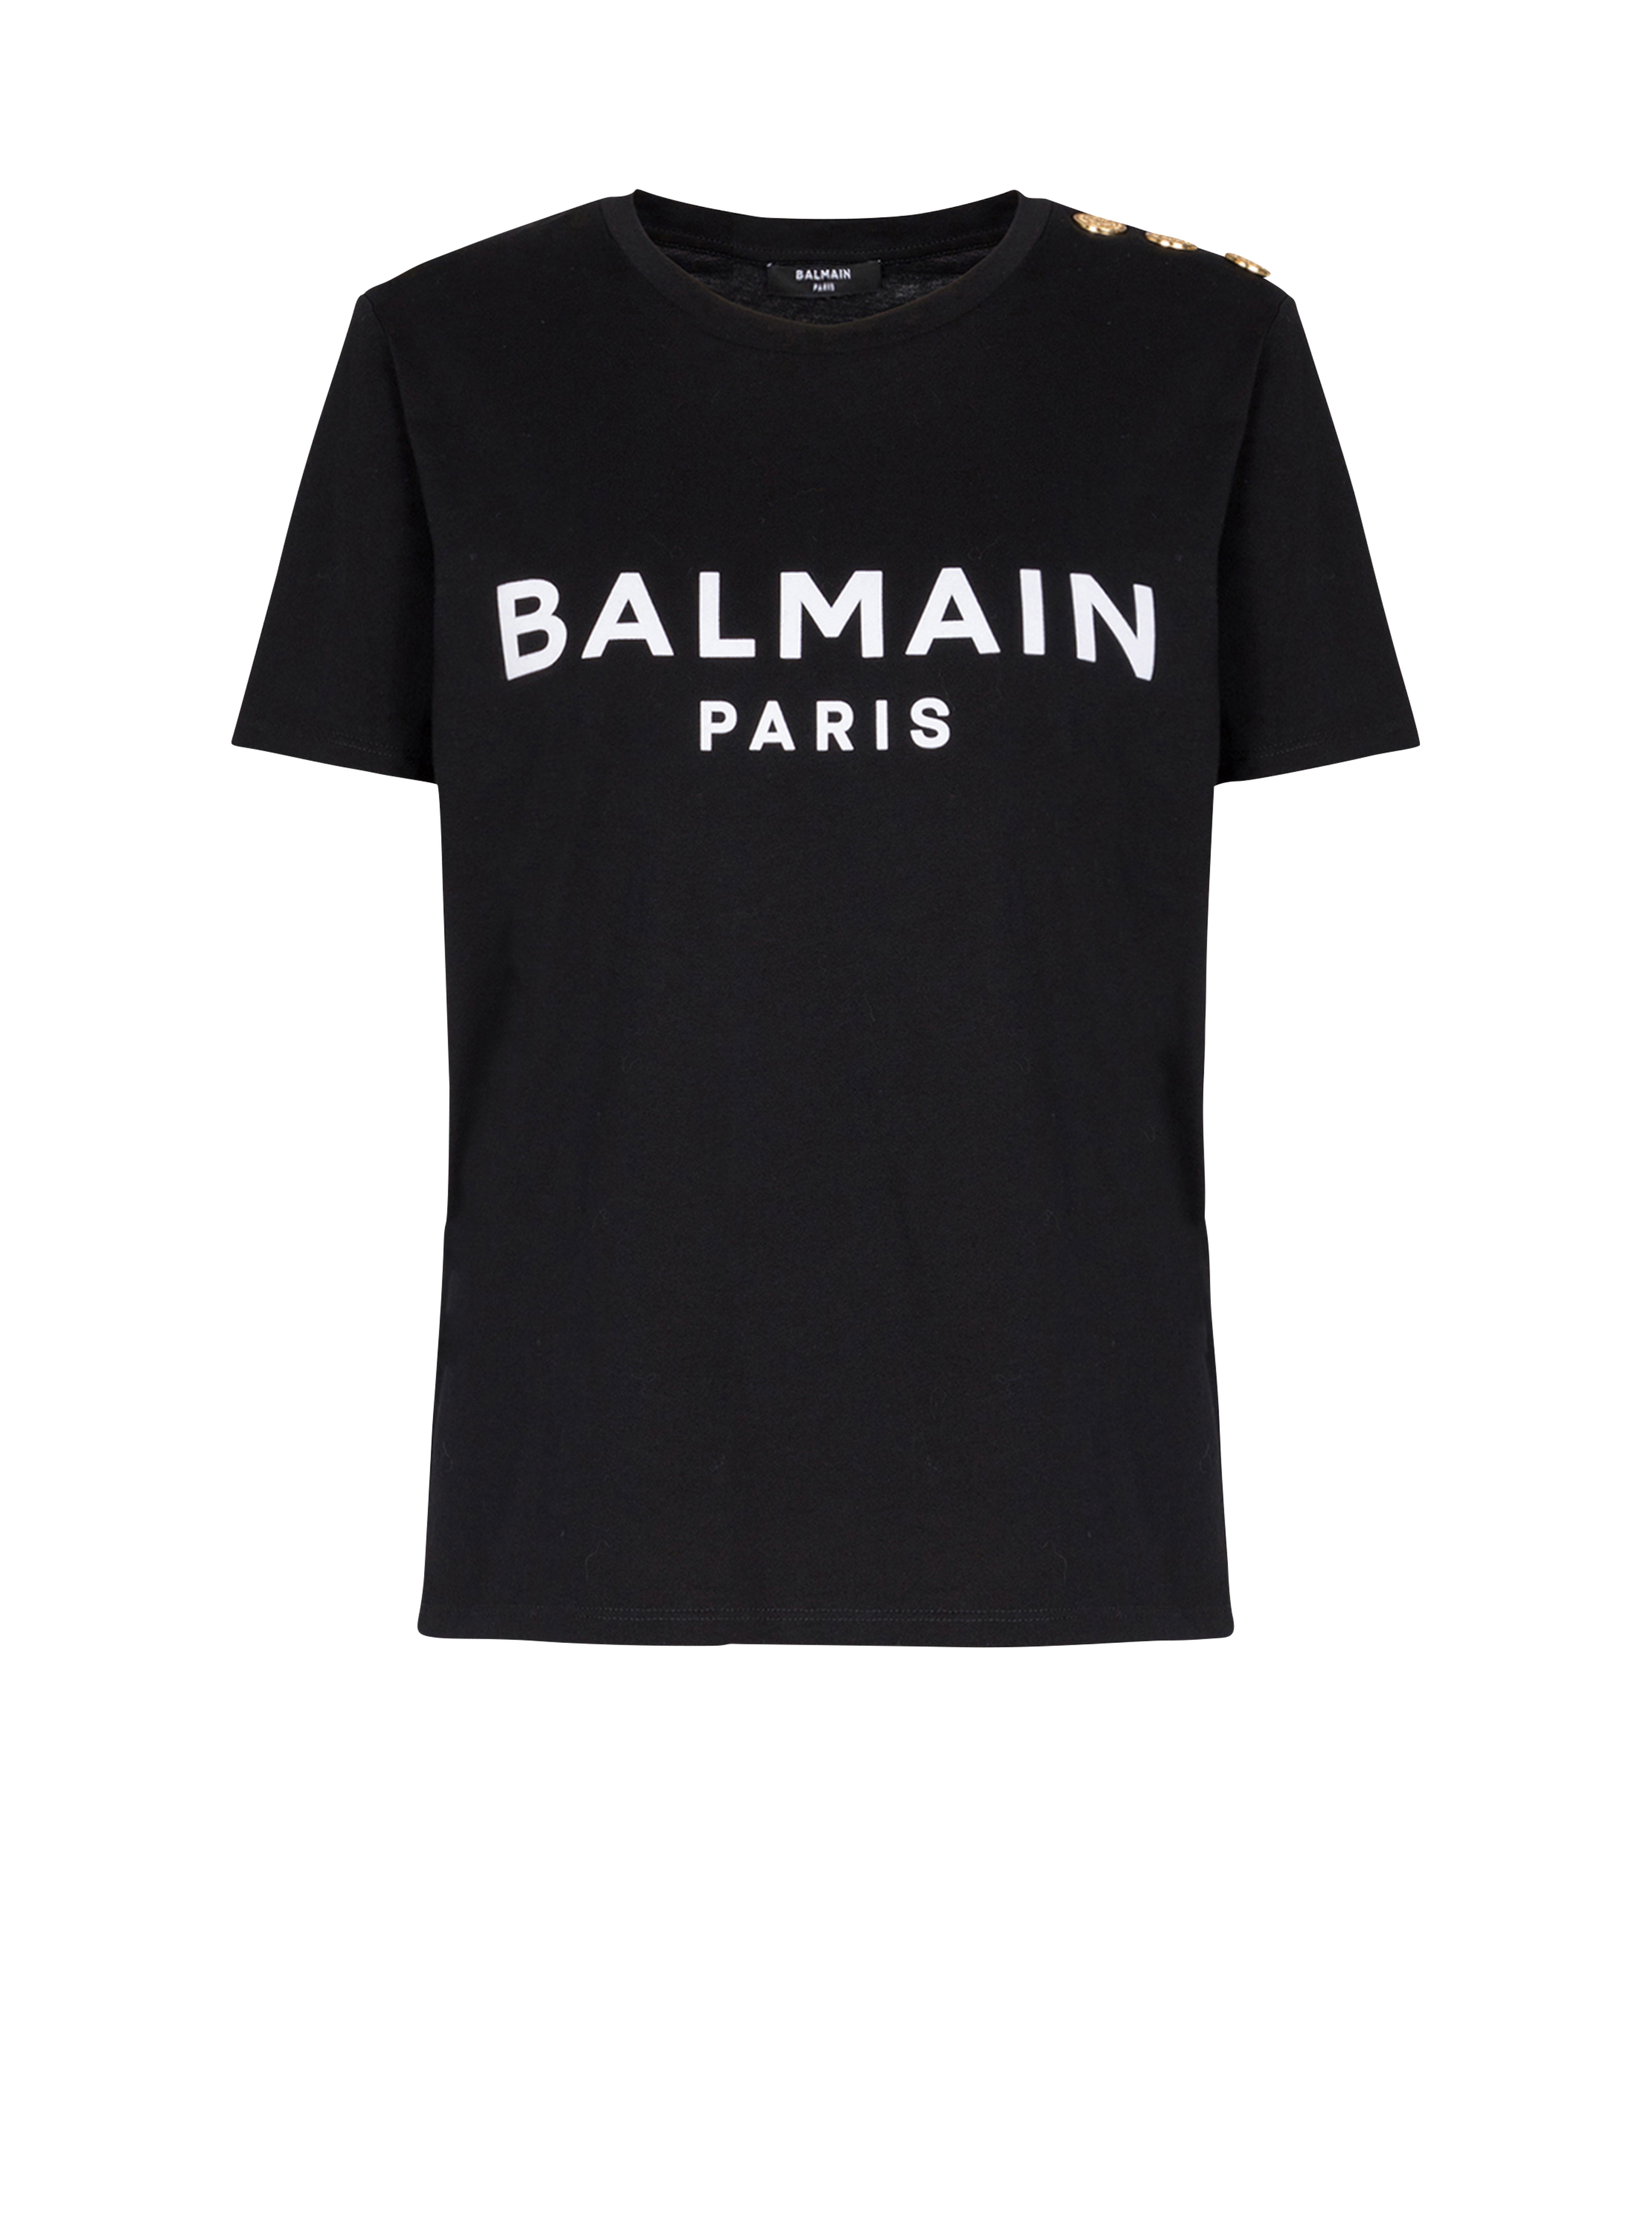 Eco-responsible cotton T-shirt with Balmain logo print, black